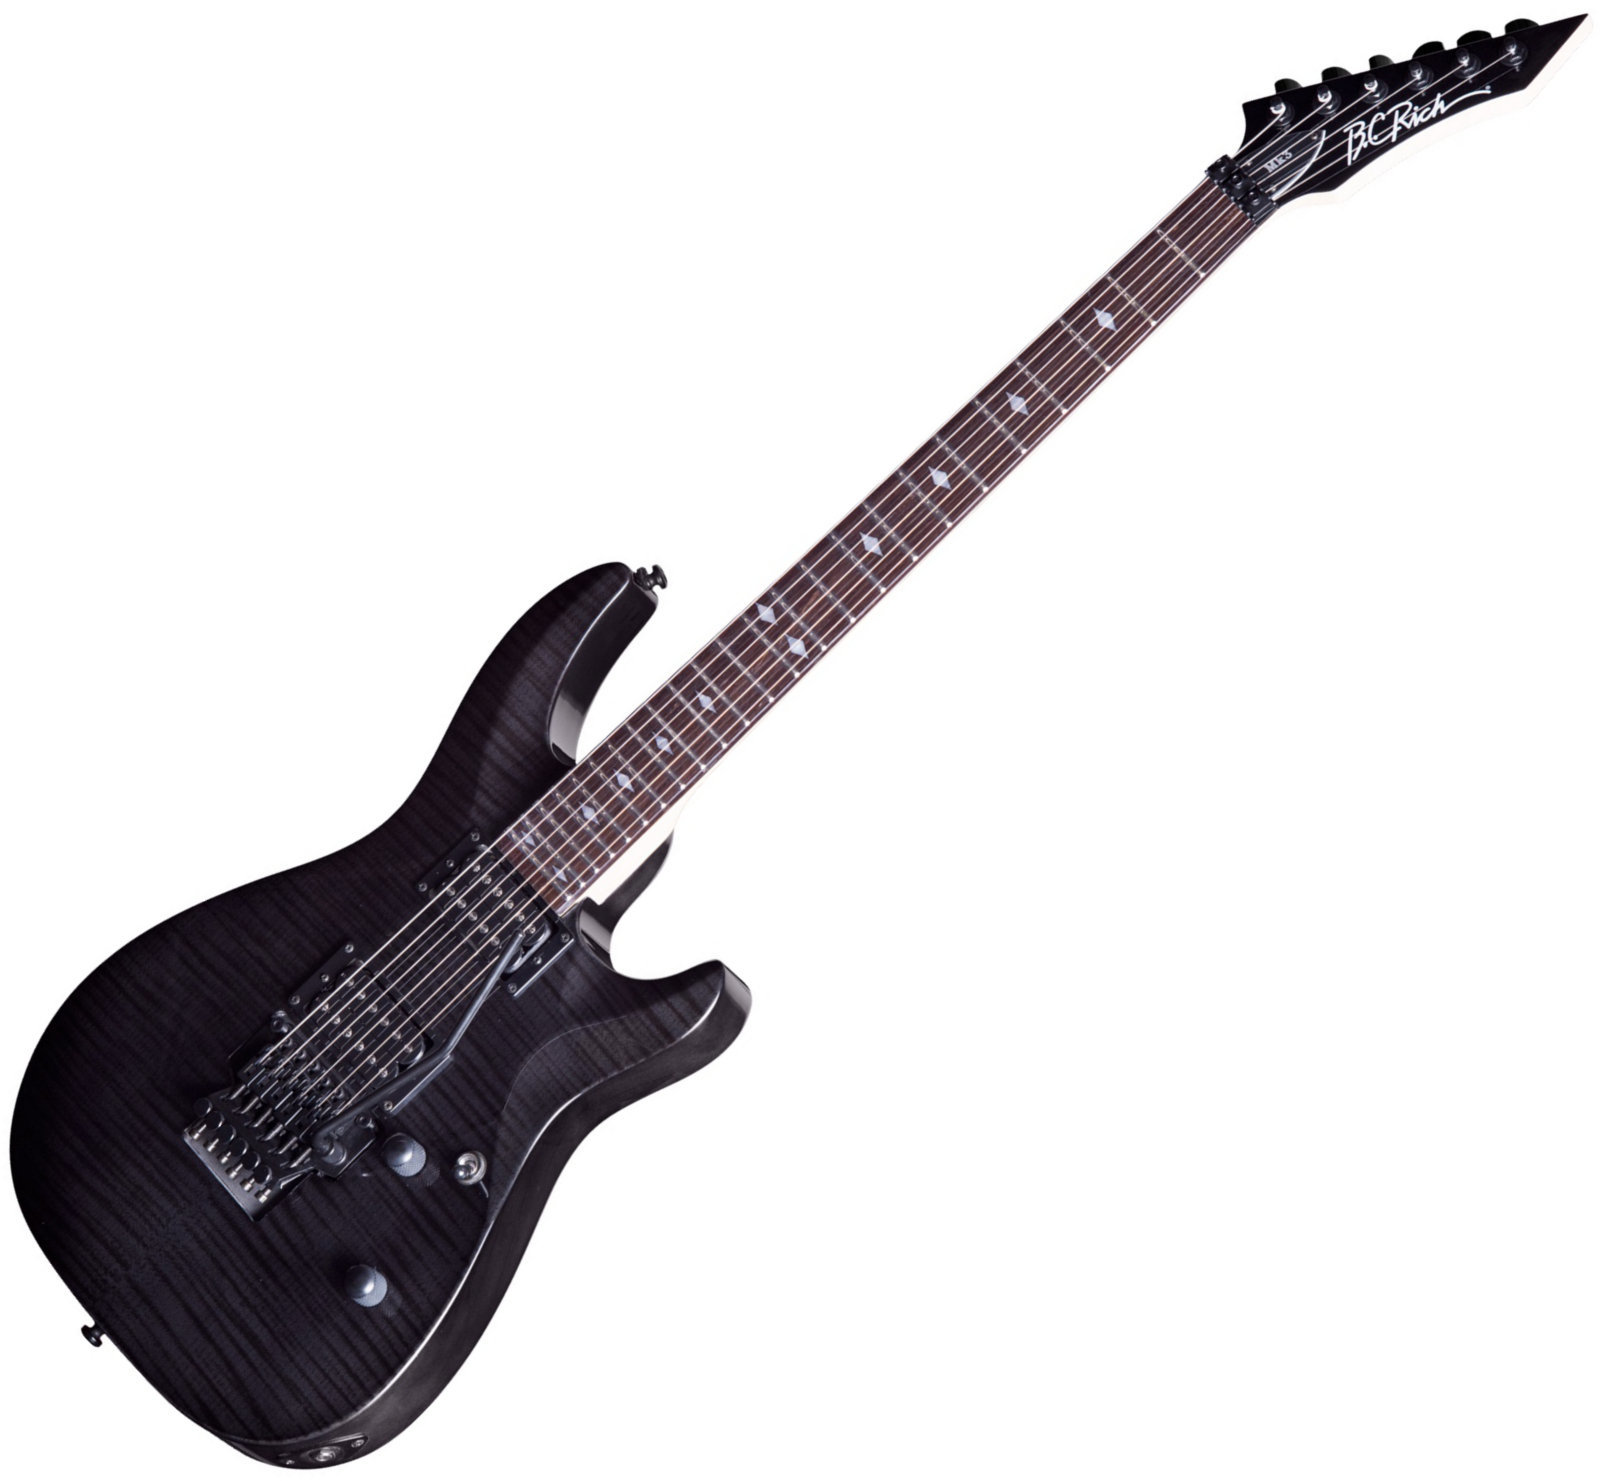 Electric guitar BC RICH MK3 Villain Transparent Black